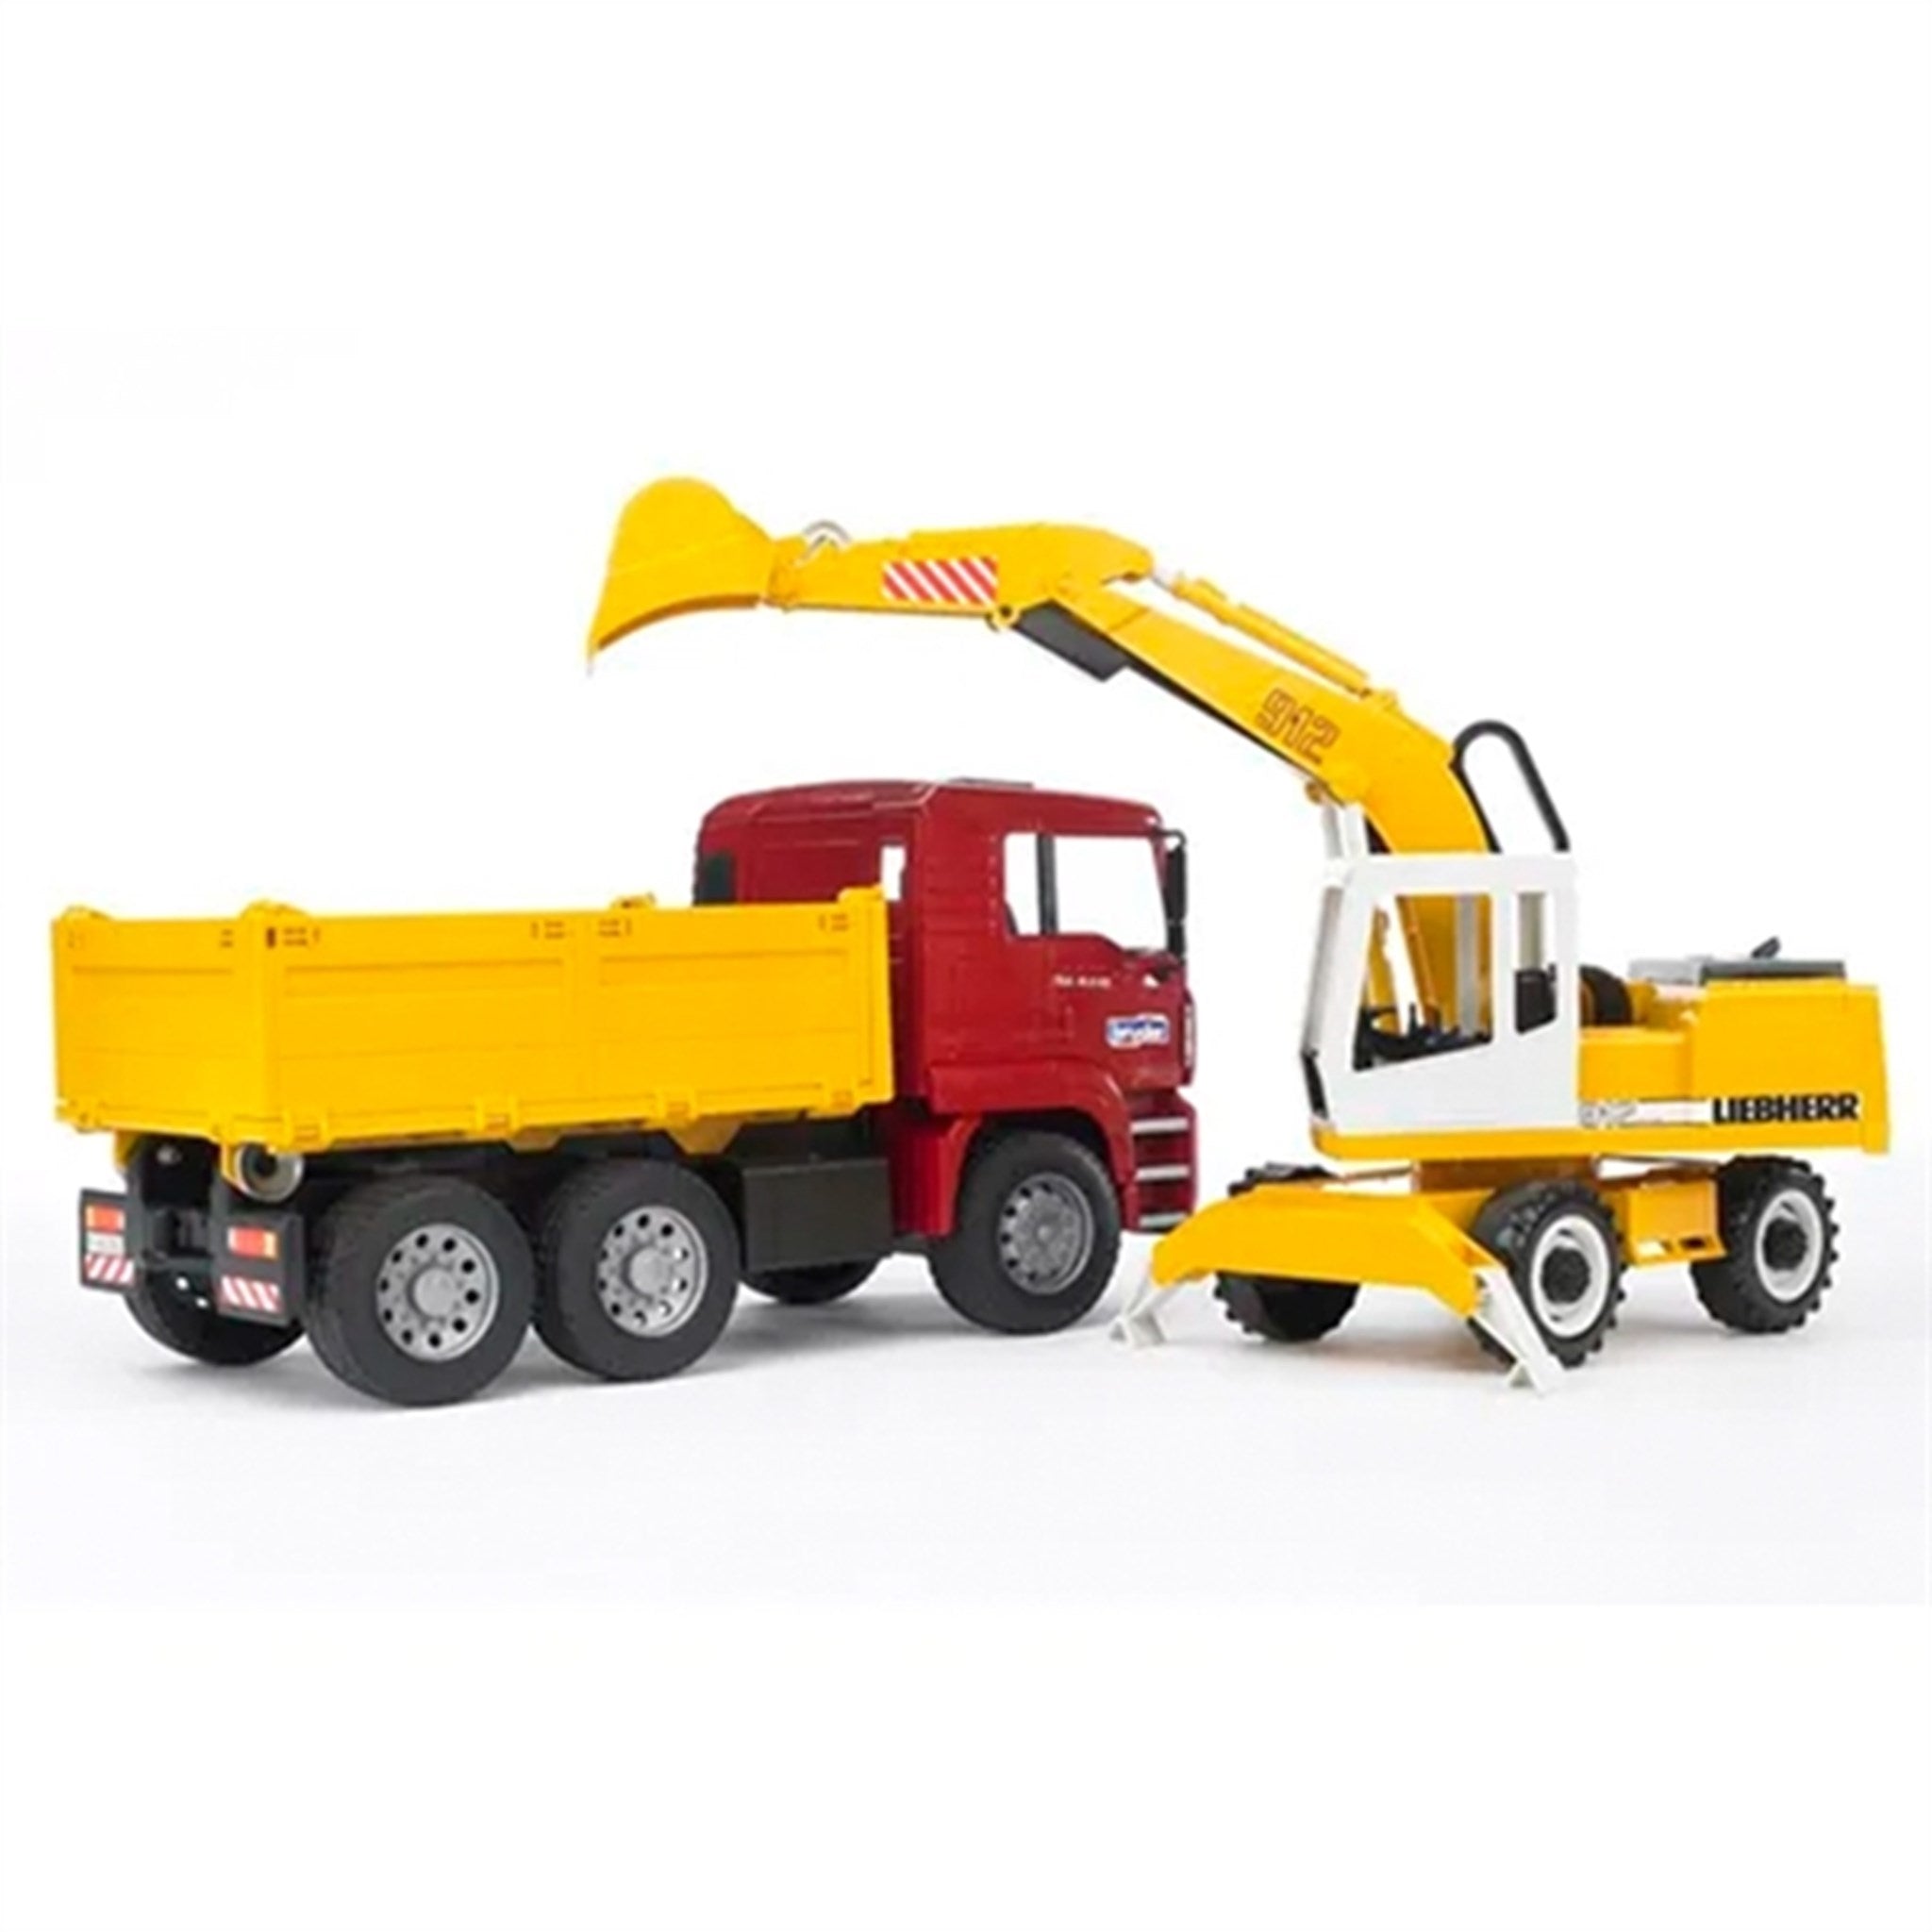 Bruder MAN TGA Construction Truck and Liebherr Excavator